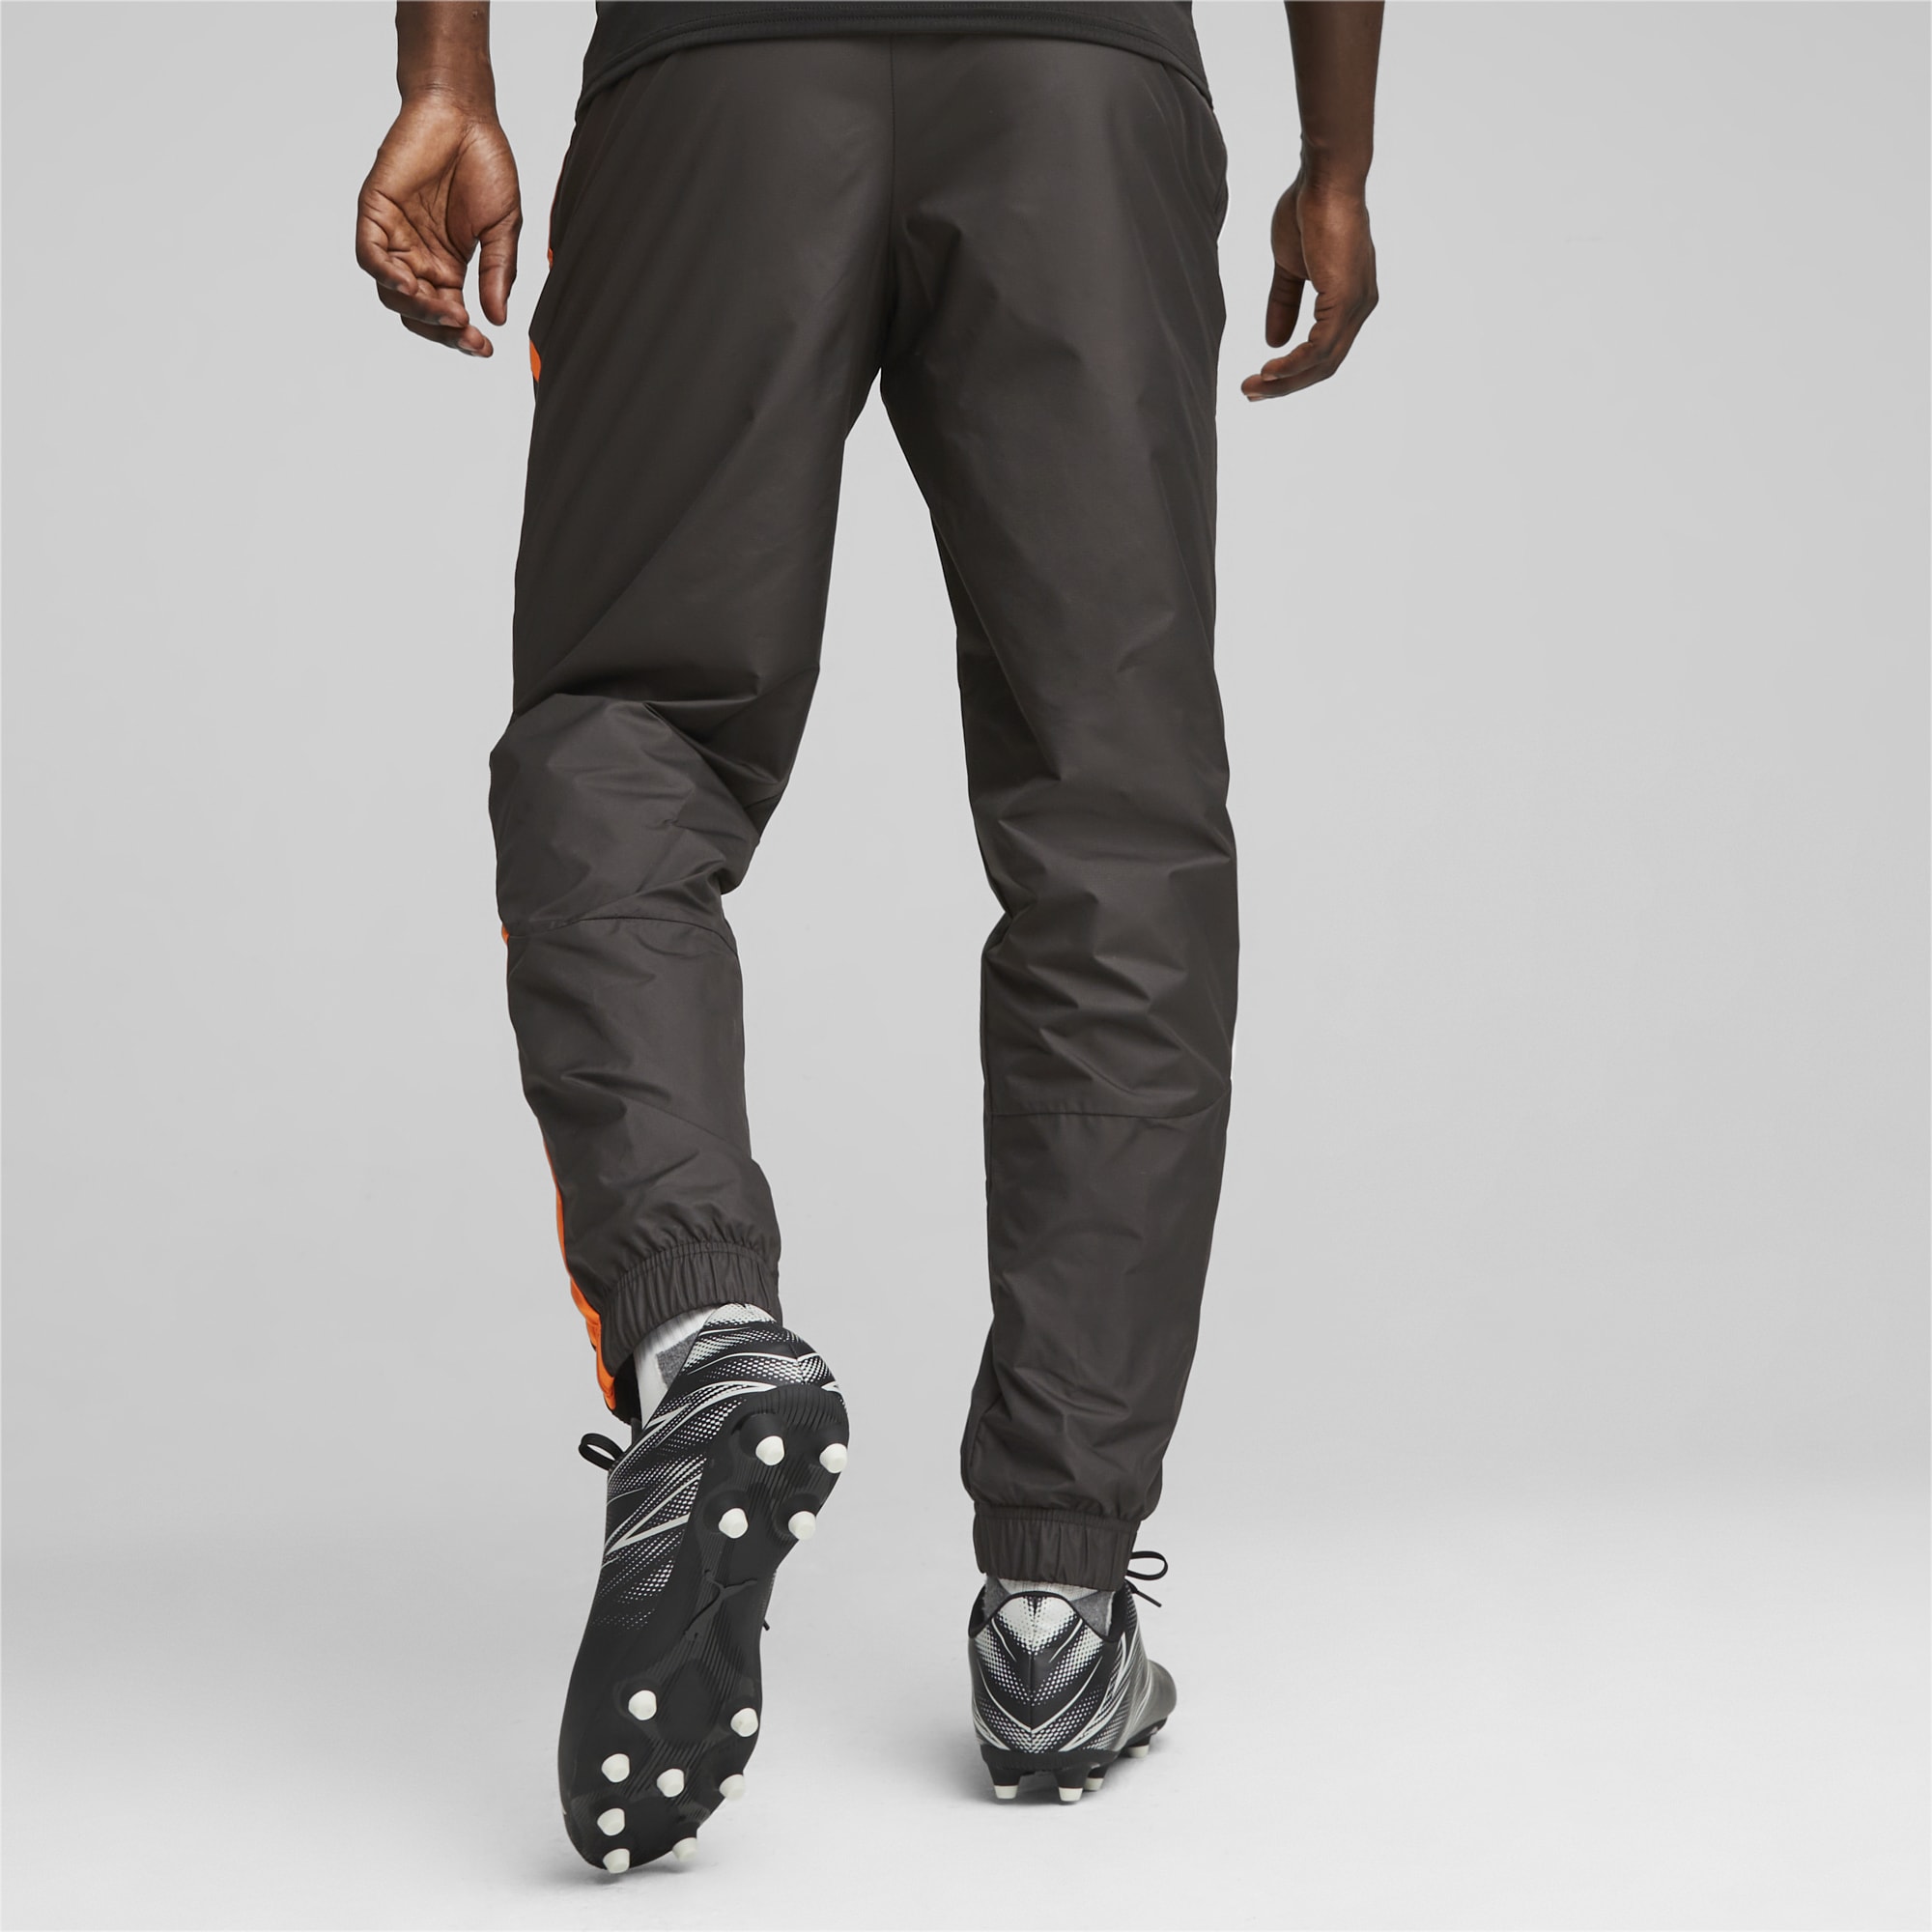 Men's PUMA Olympique De Marseille Prematch Football Pants, Black/Flat Dark Grey, Size M, Clothing